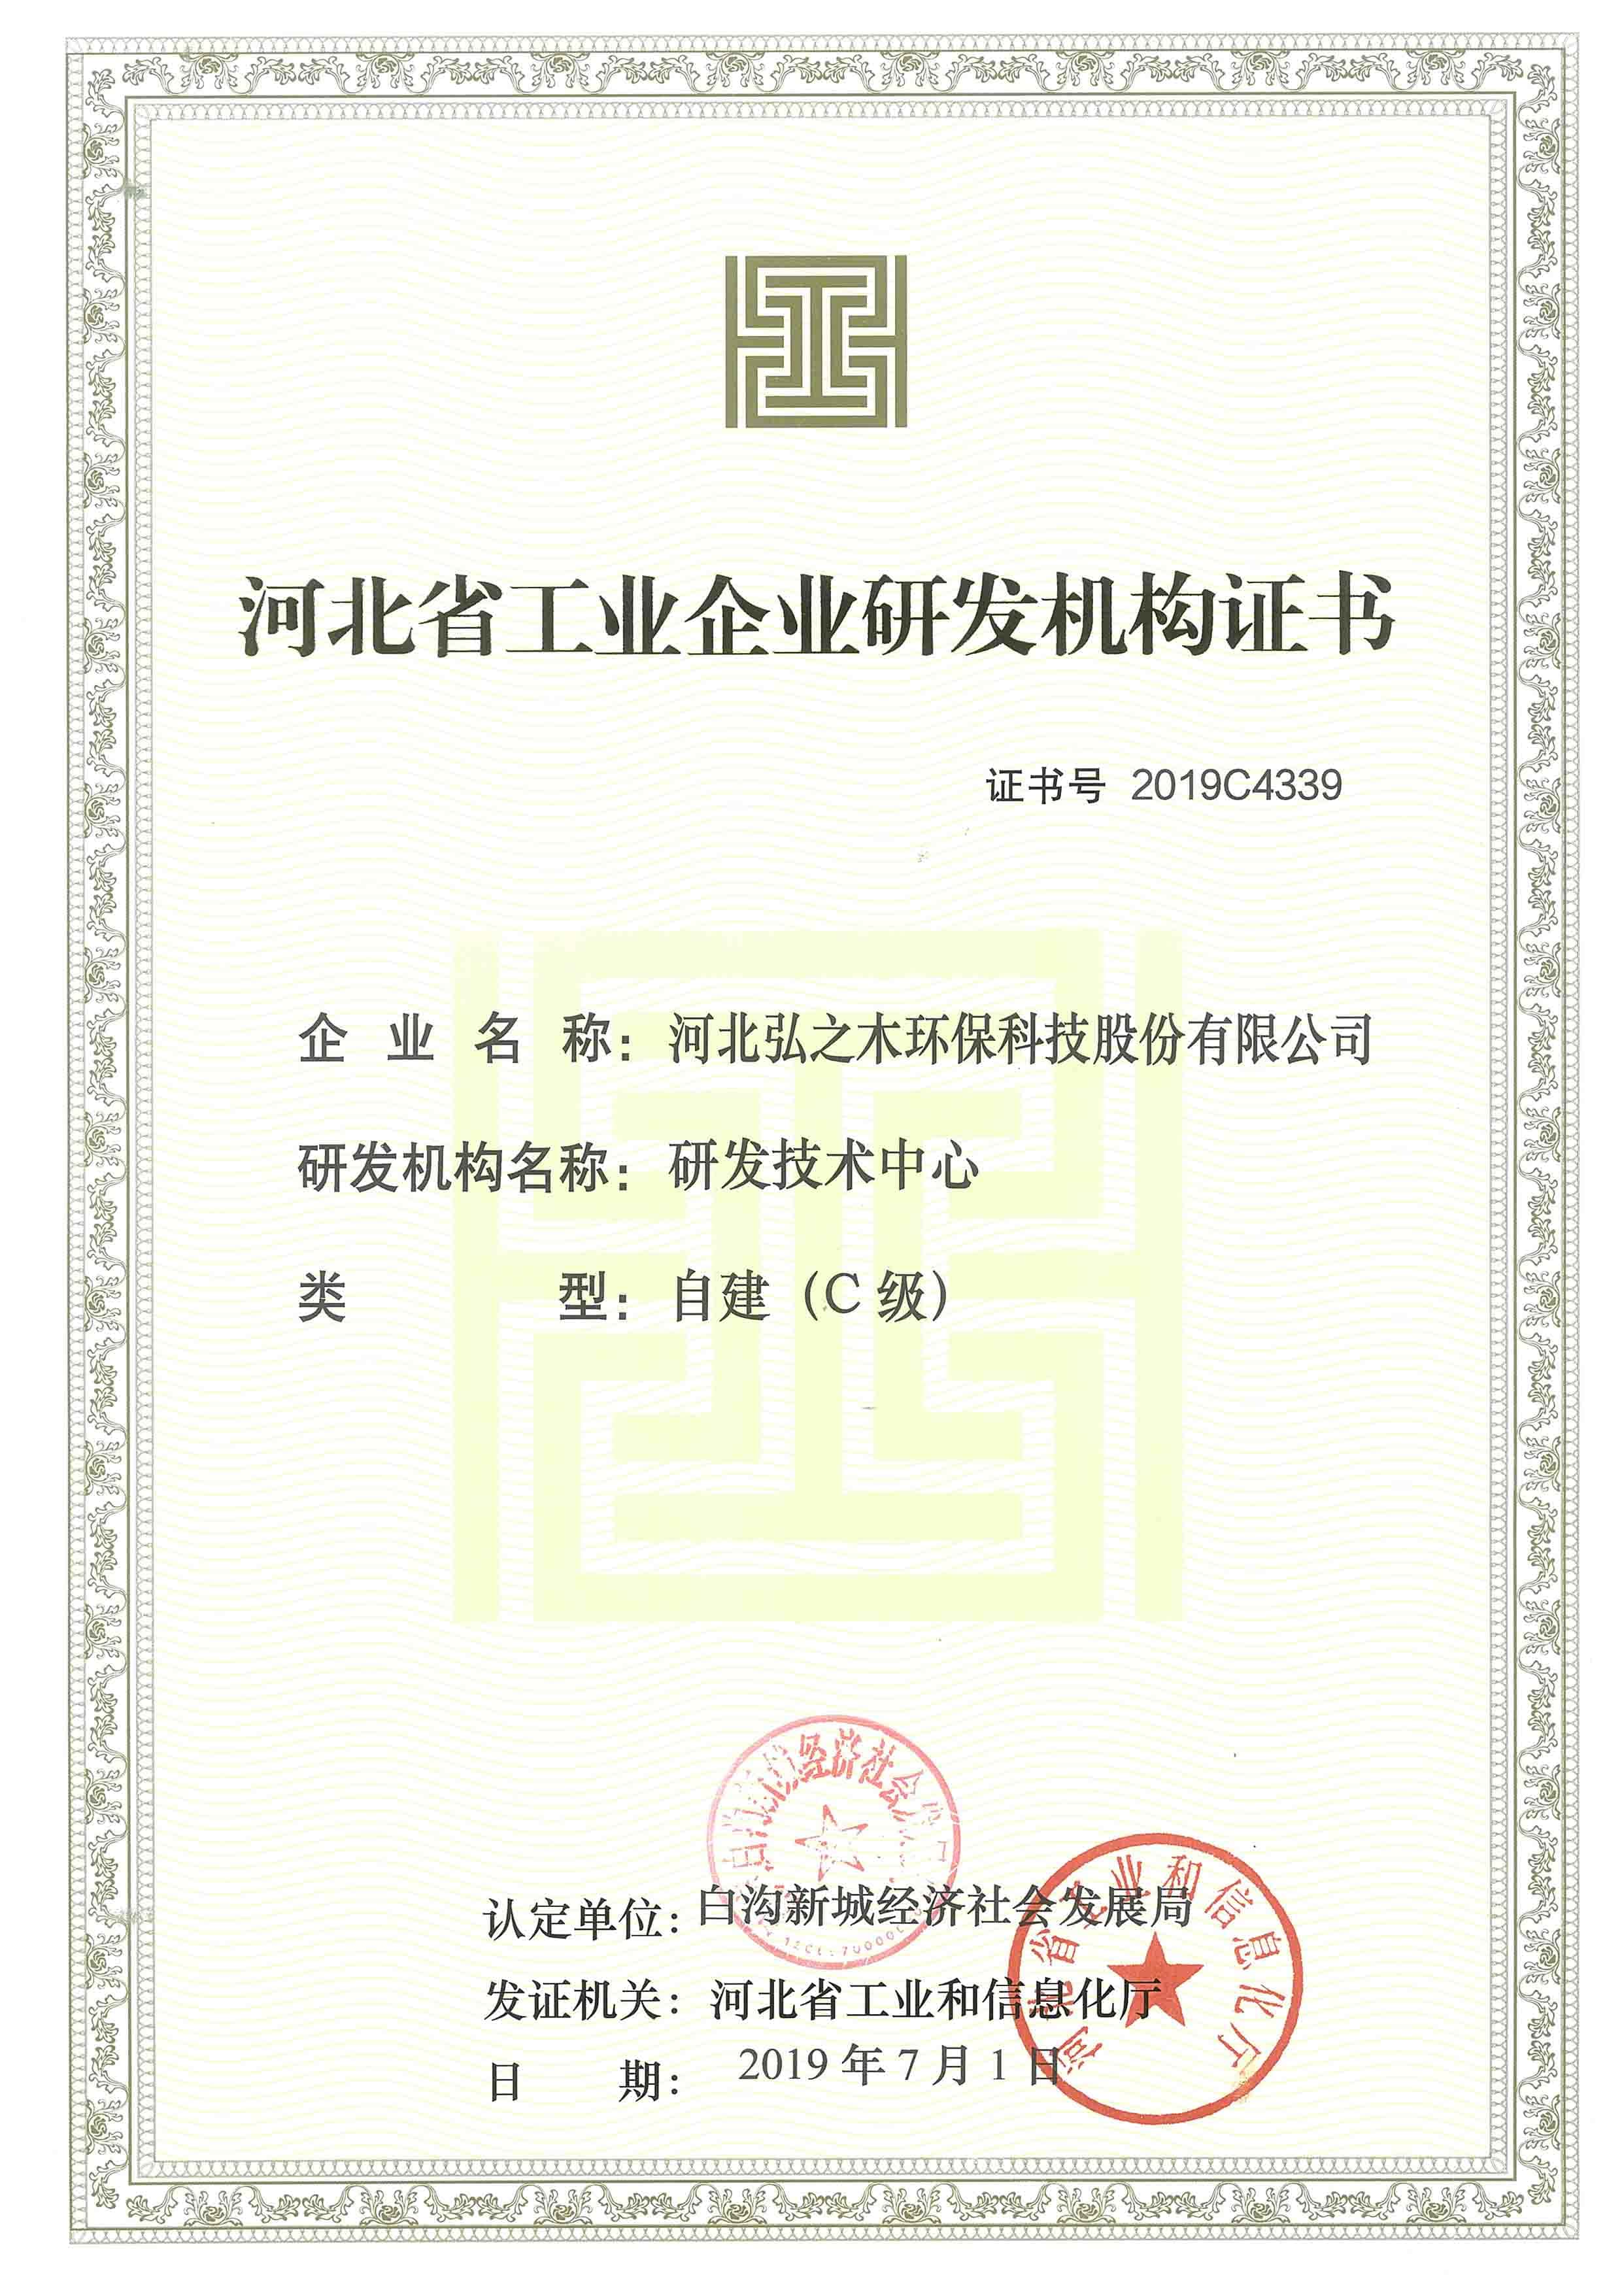 Certificate of Industrial Enterprise R&D Organization in Hebei Province